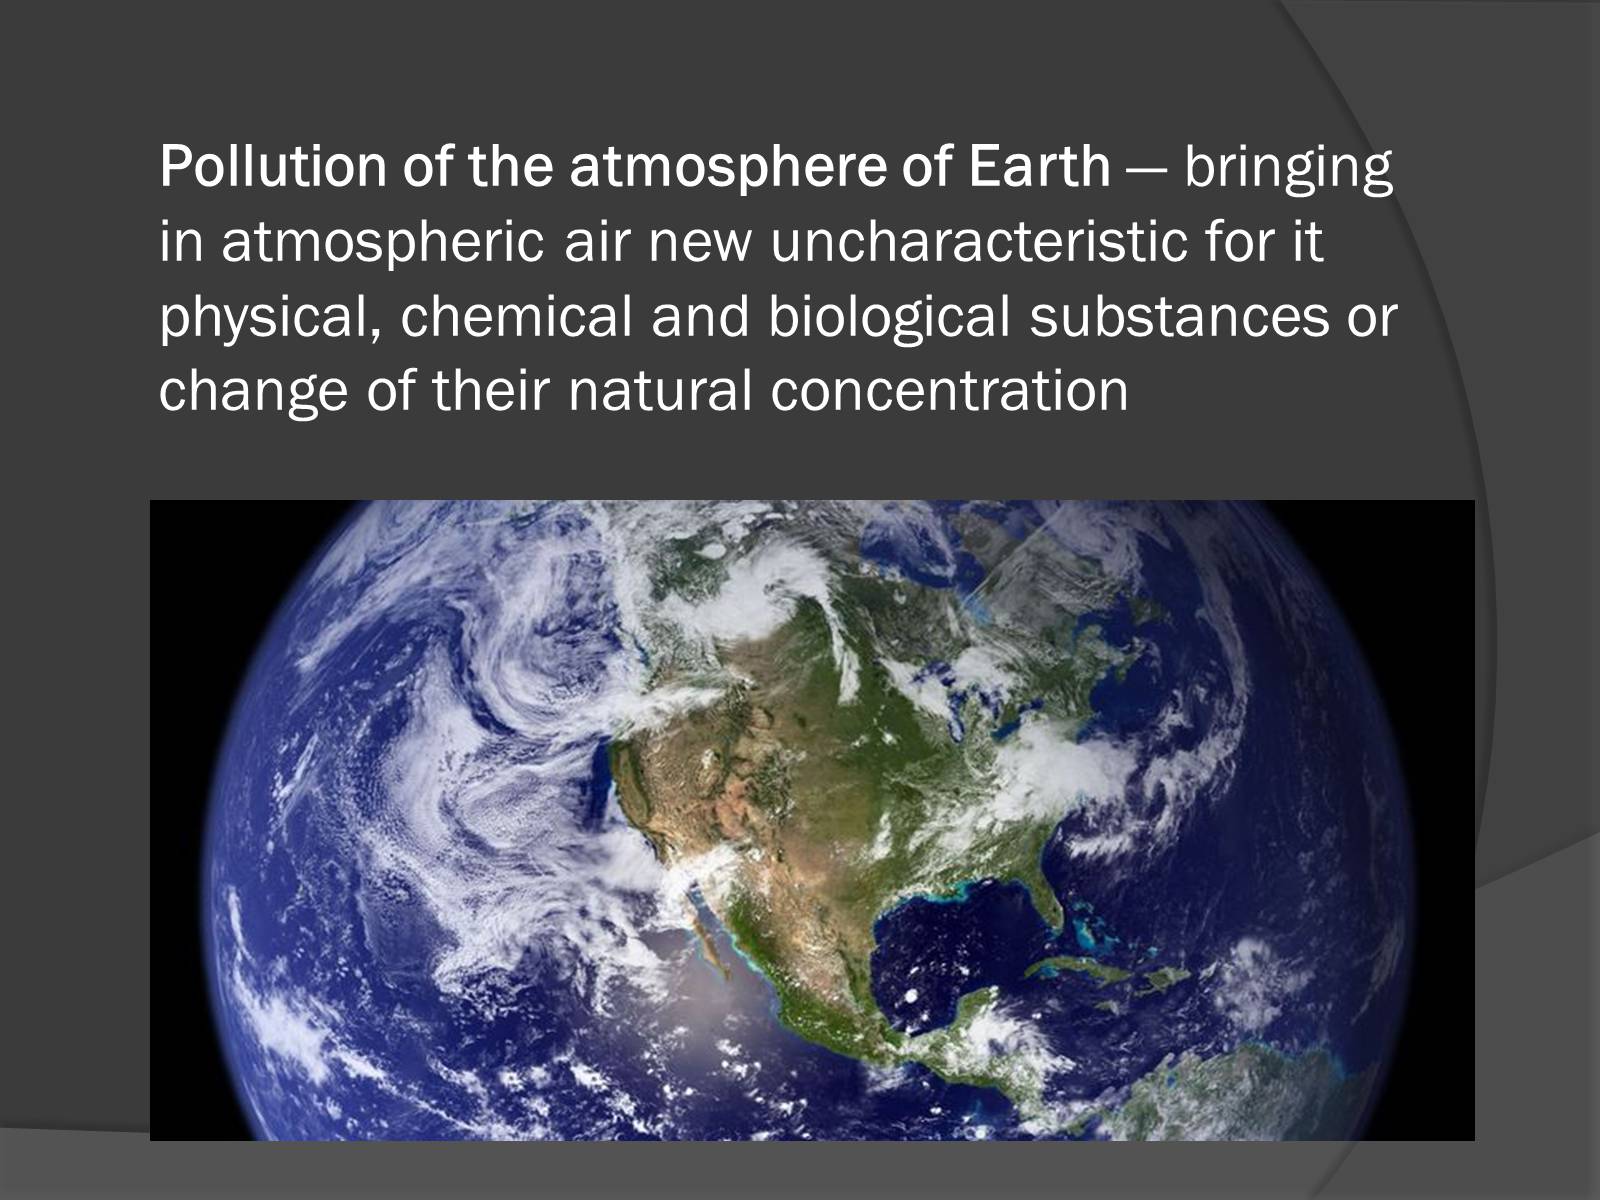 Презентація на тему «Pollution of the atmosphere of Earth» - Слайд #2